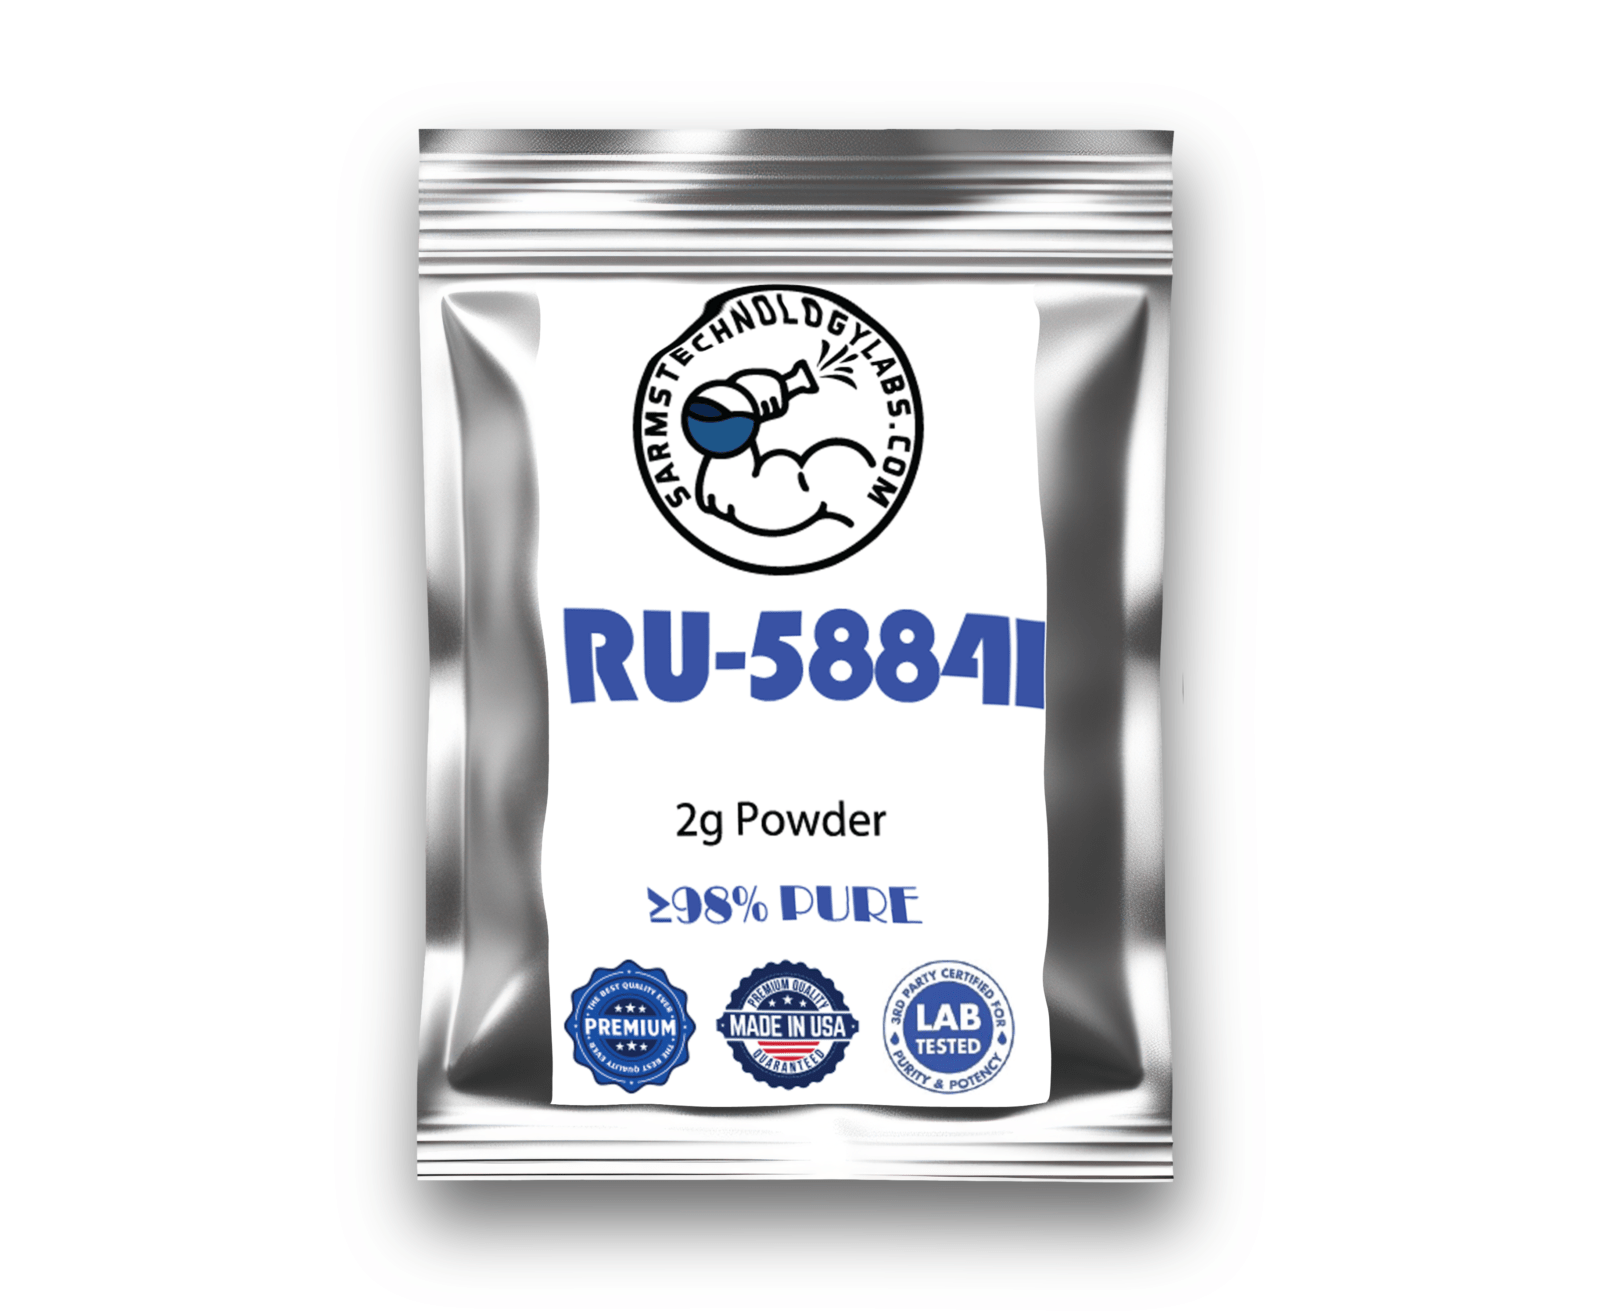 Buy High-Quality RU 58841 2g Powder for Research